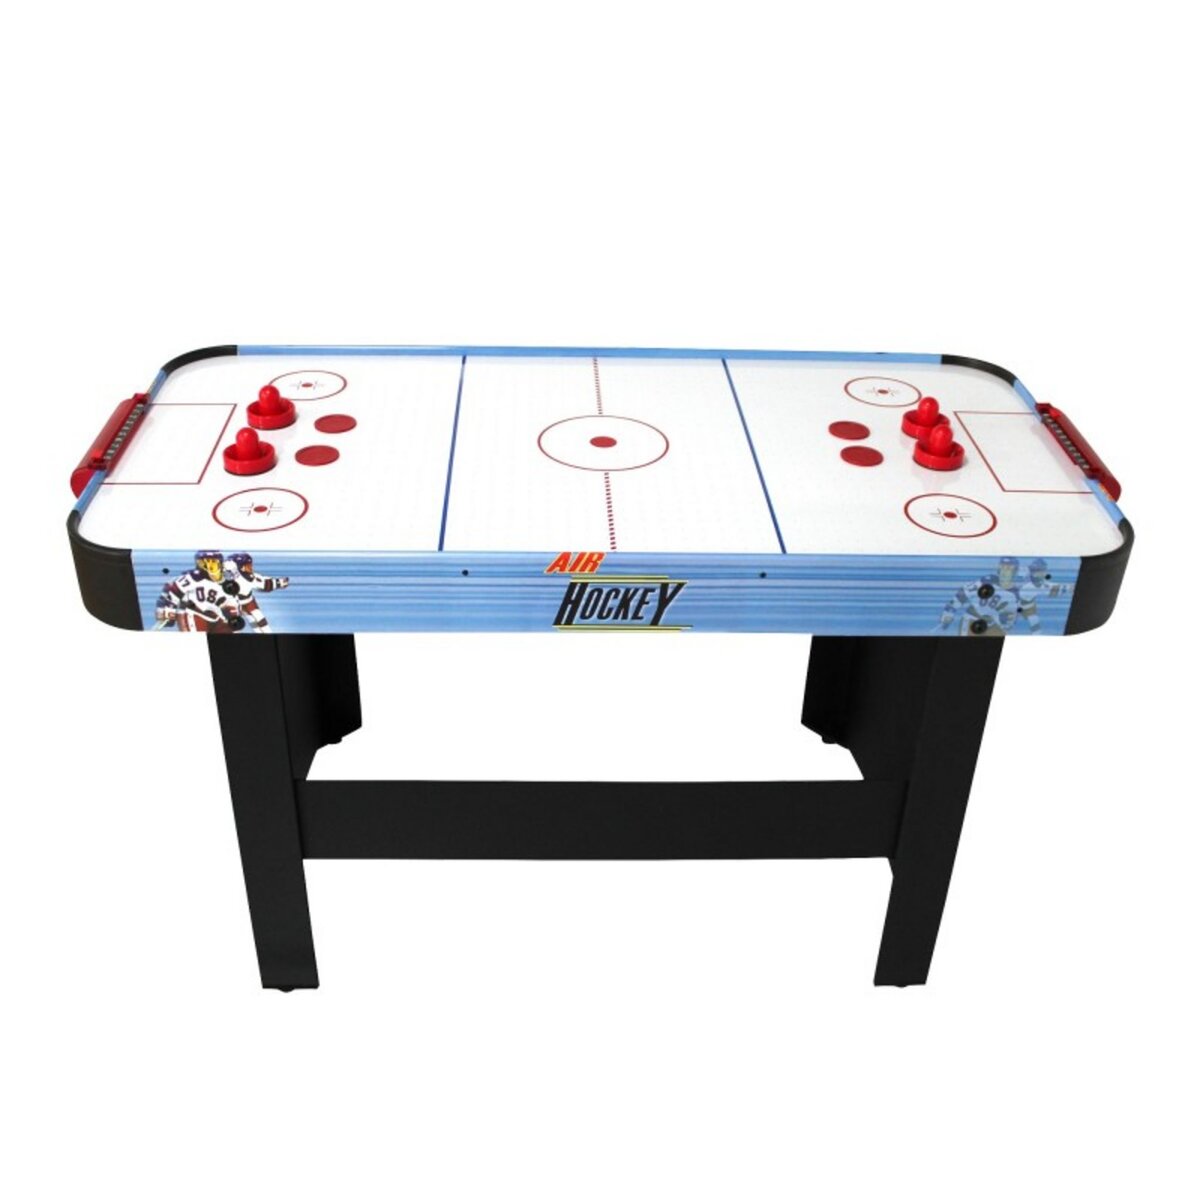 PLAY4FUN Air Hockey Teenager - Table de Air-Hockey avec système d'air pulsé 6-8W - 142 x 72 x 81 cm - Bleu/Noir